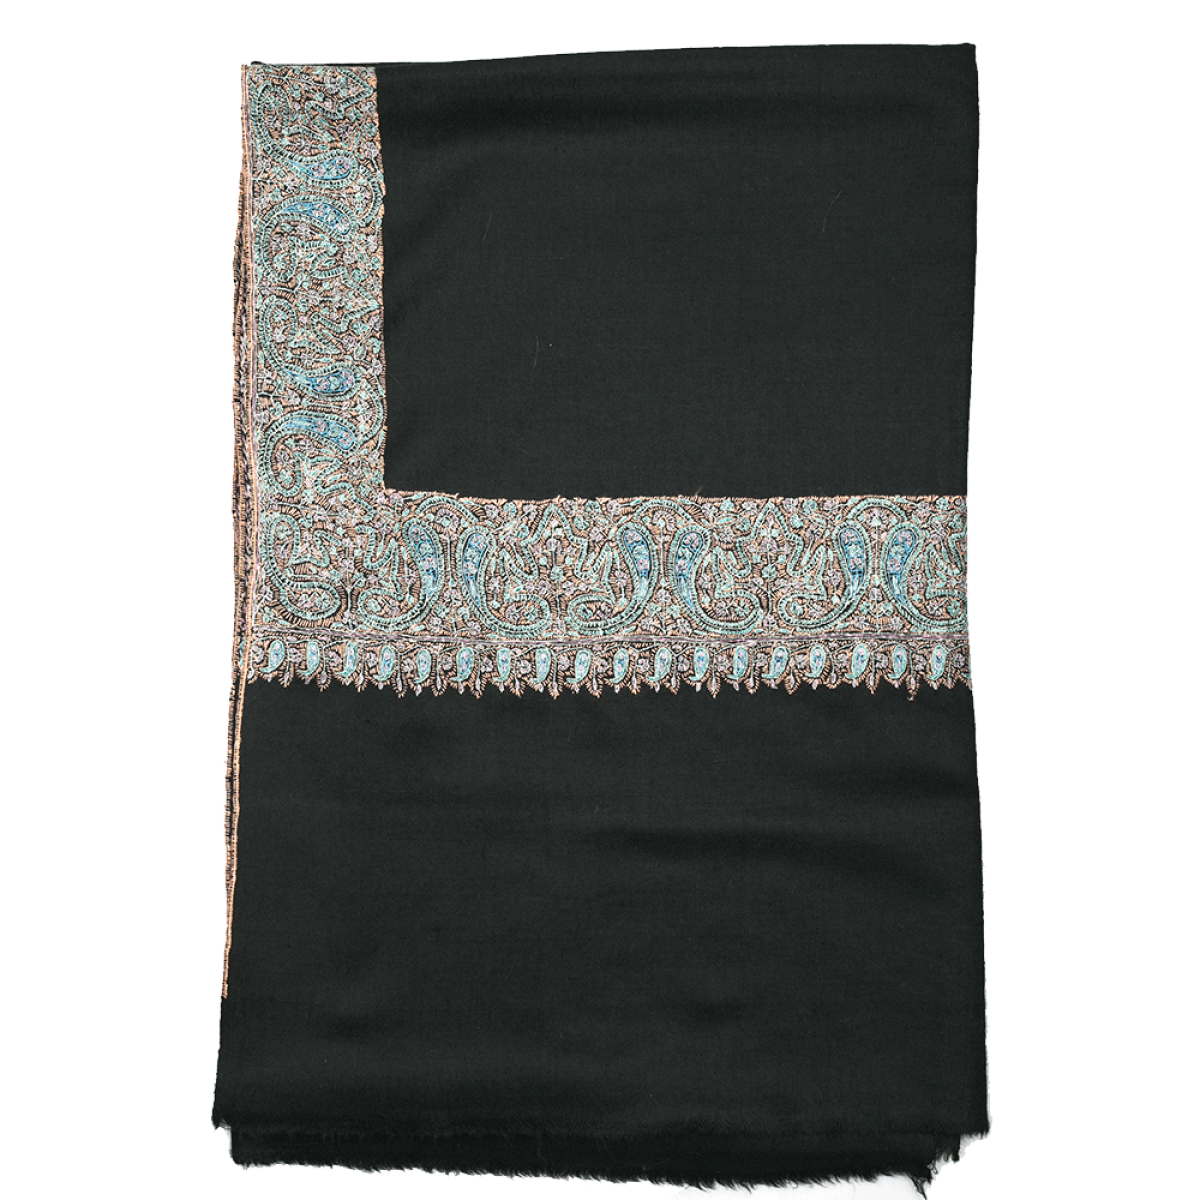 Embroidered Pashmina Shawl - Black & Blue